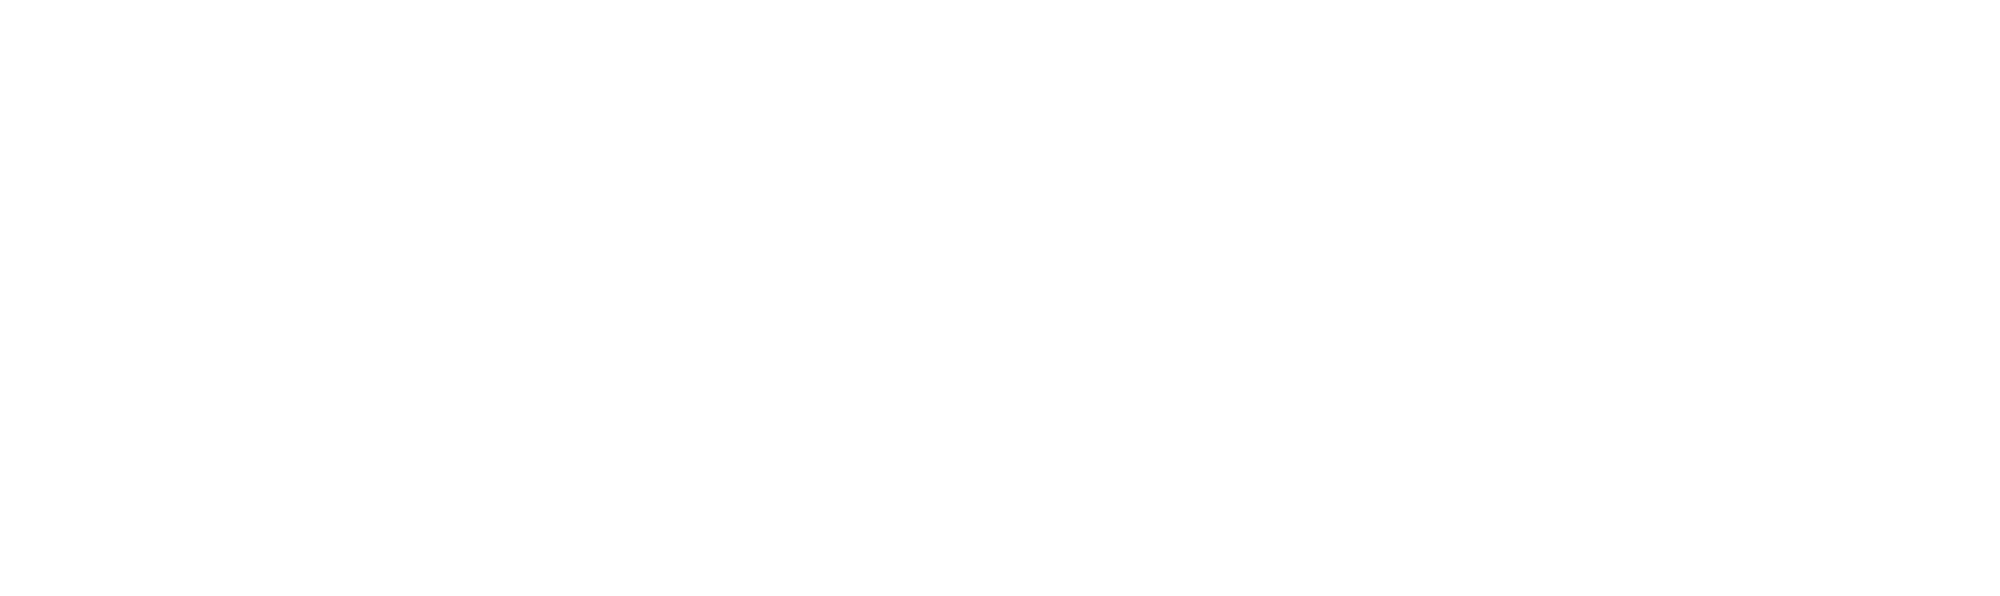 JGoldcrown logo with PAX logo